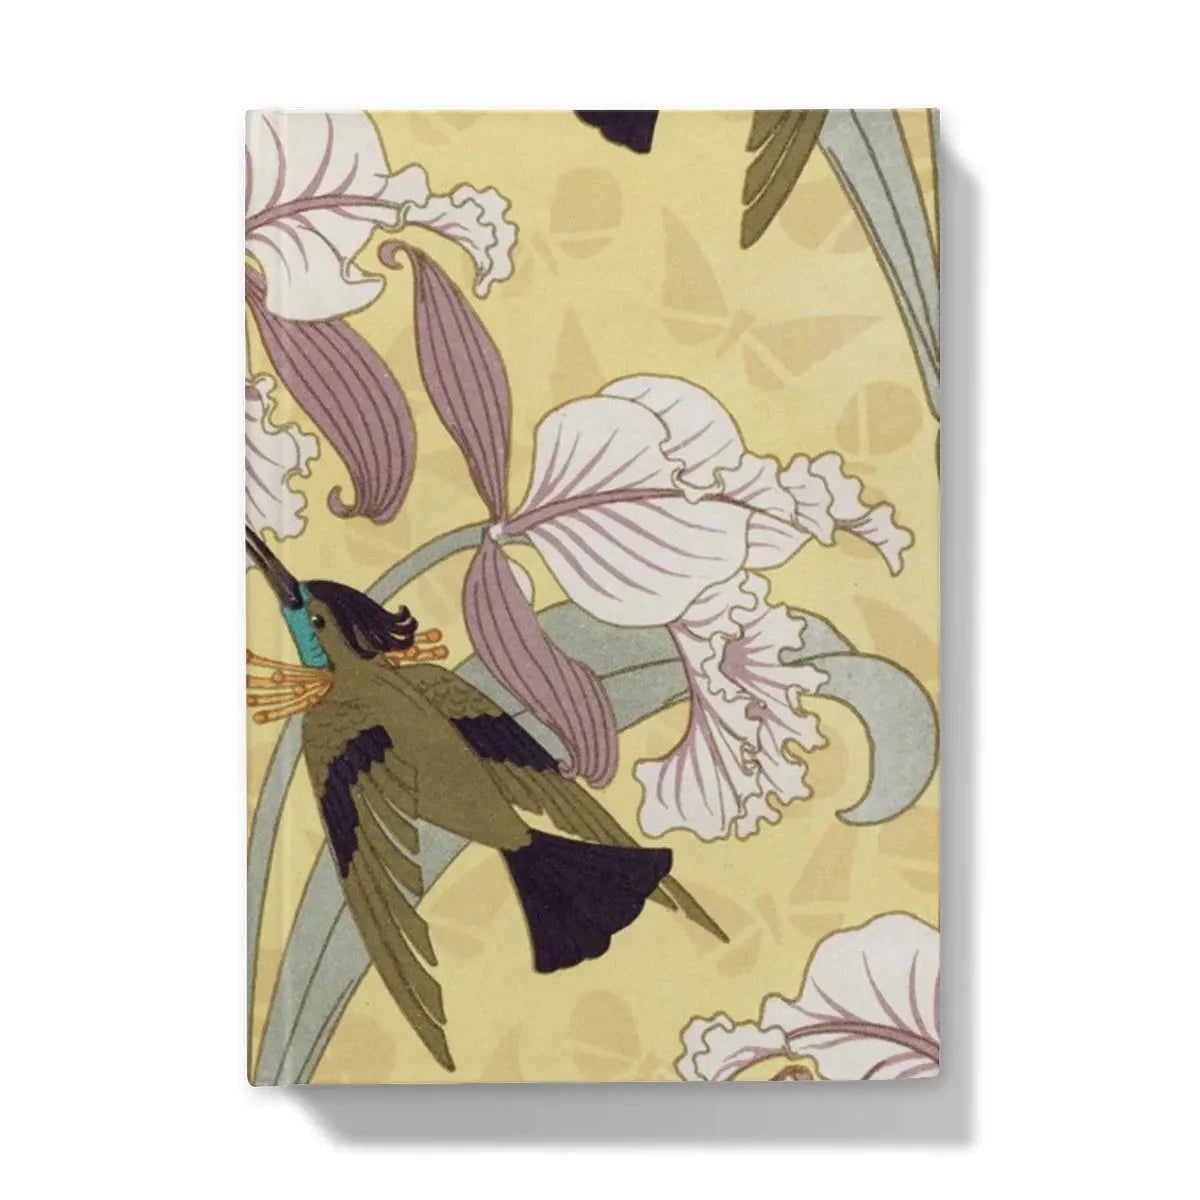 Oiseaux - mouches Et Orchidées By Maurice Pillard Verneuil Hardback Journal - 5’x7’ / 5’ x 7’ - Lined Paper